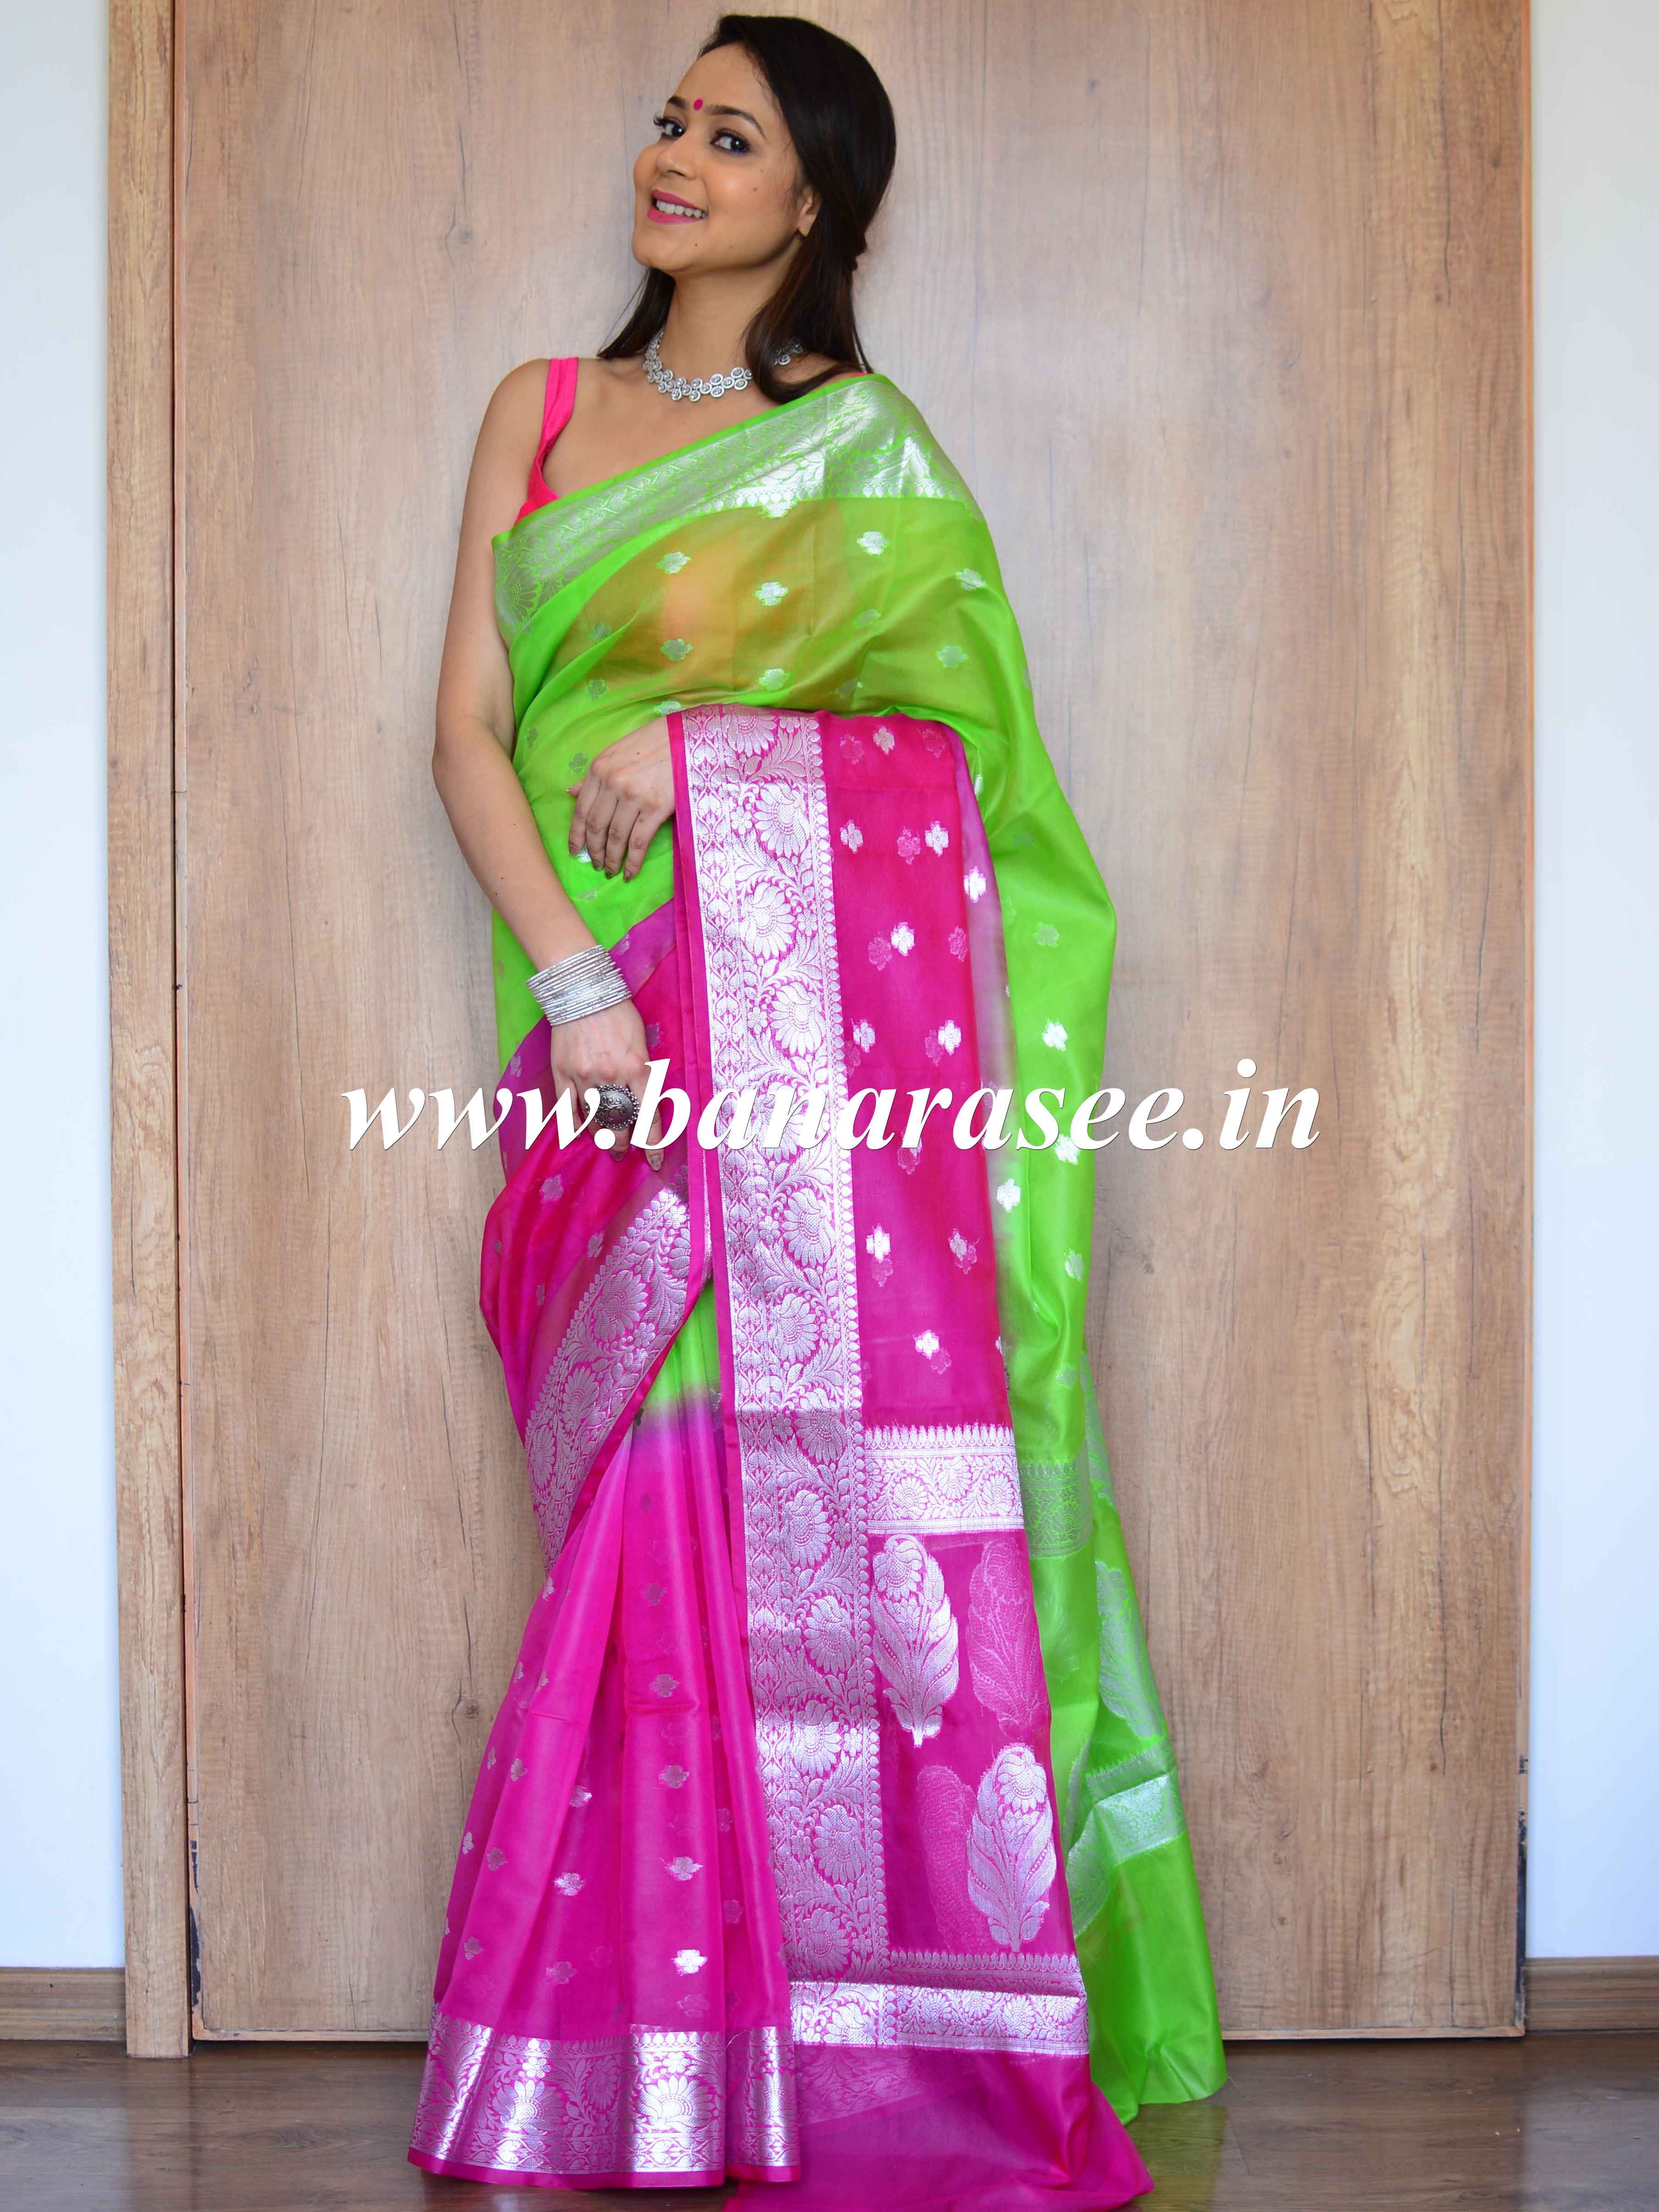 Banarasee Organza Saree With Silver Zari Design & Dual Color-Pink & Green